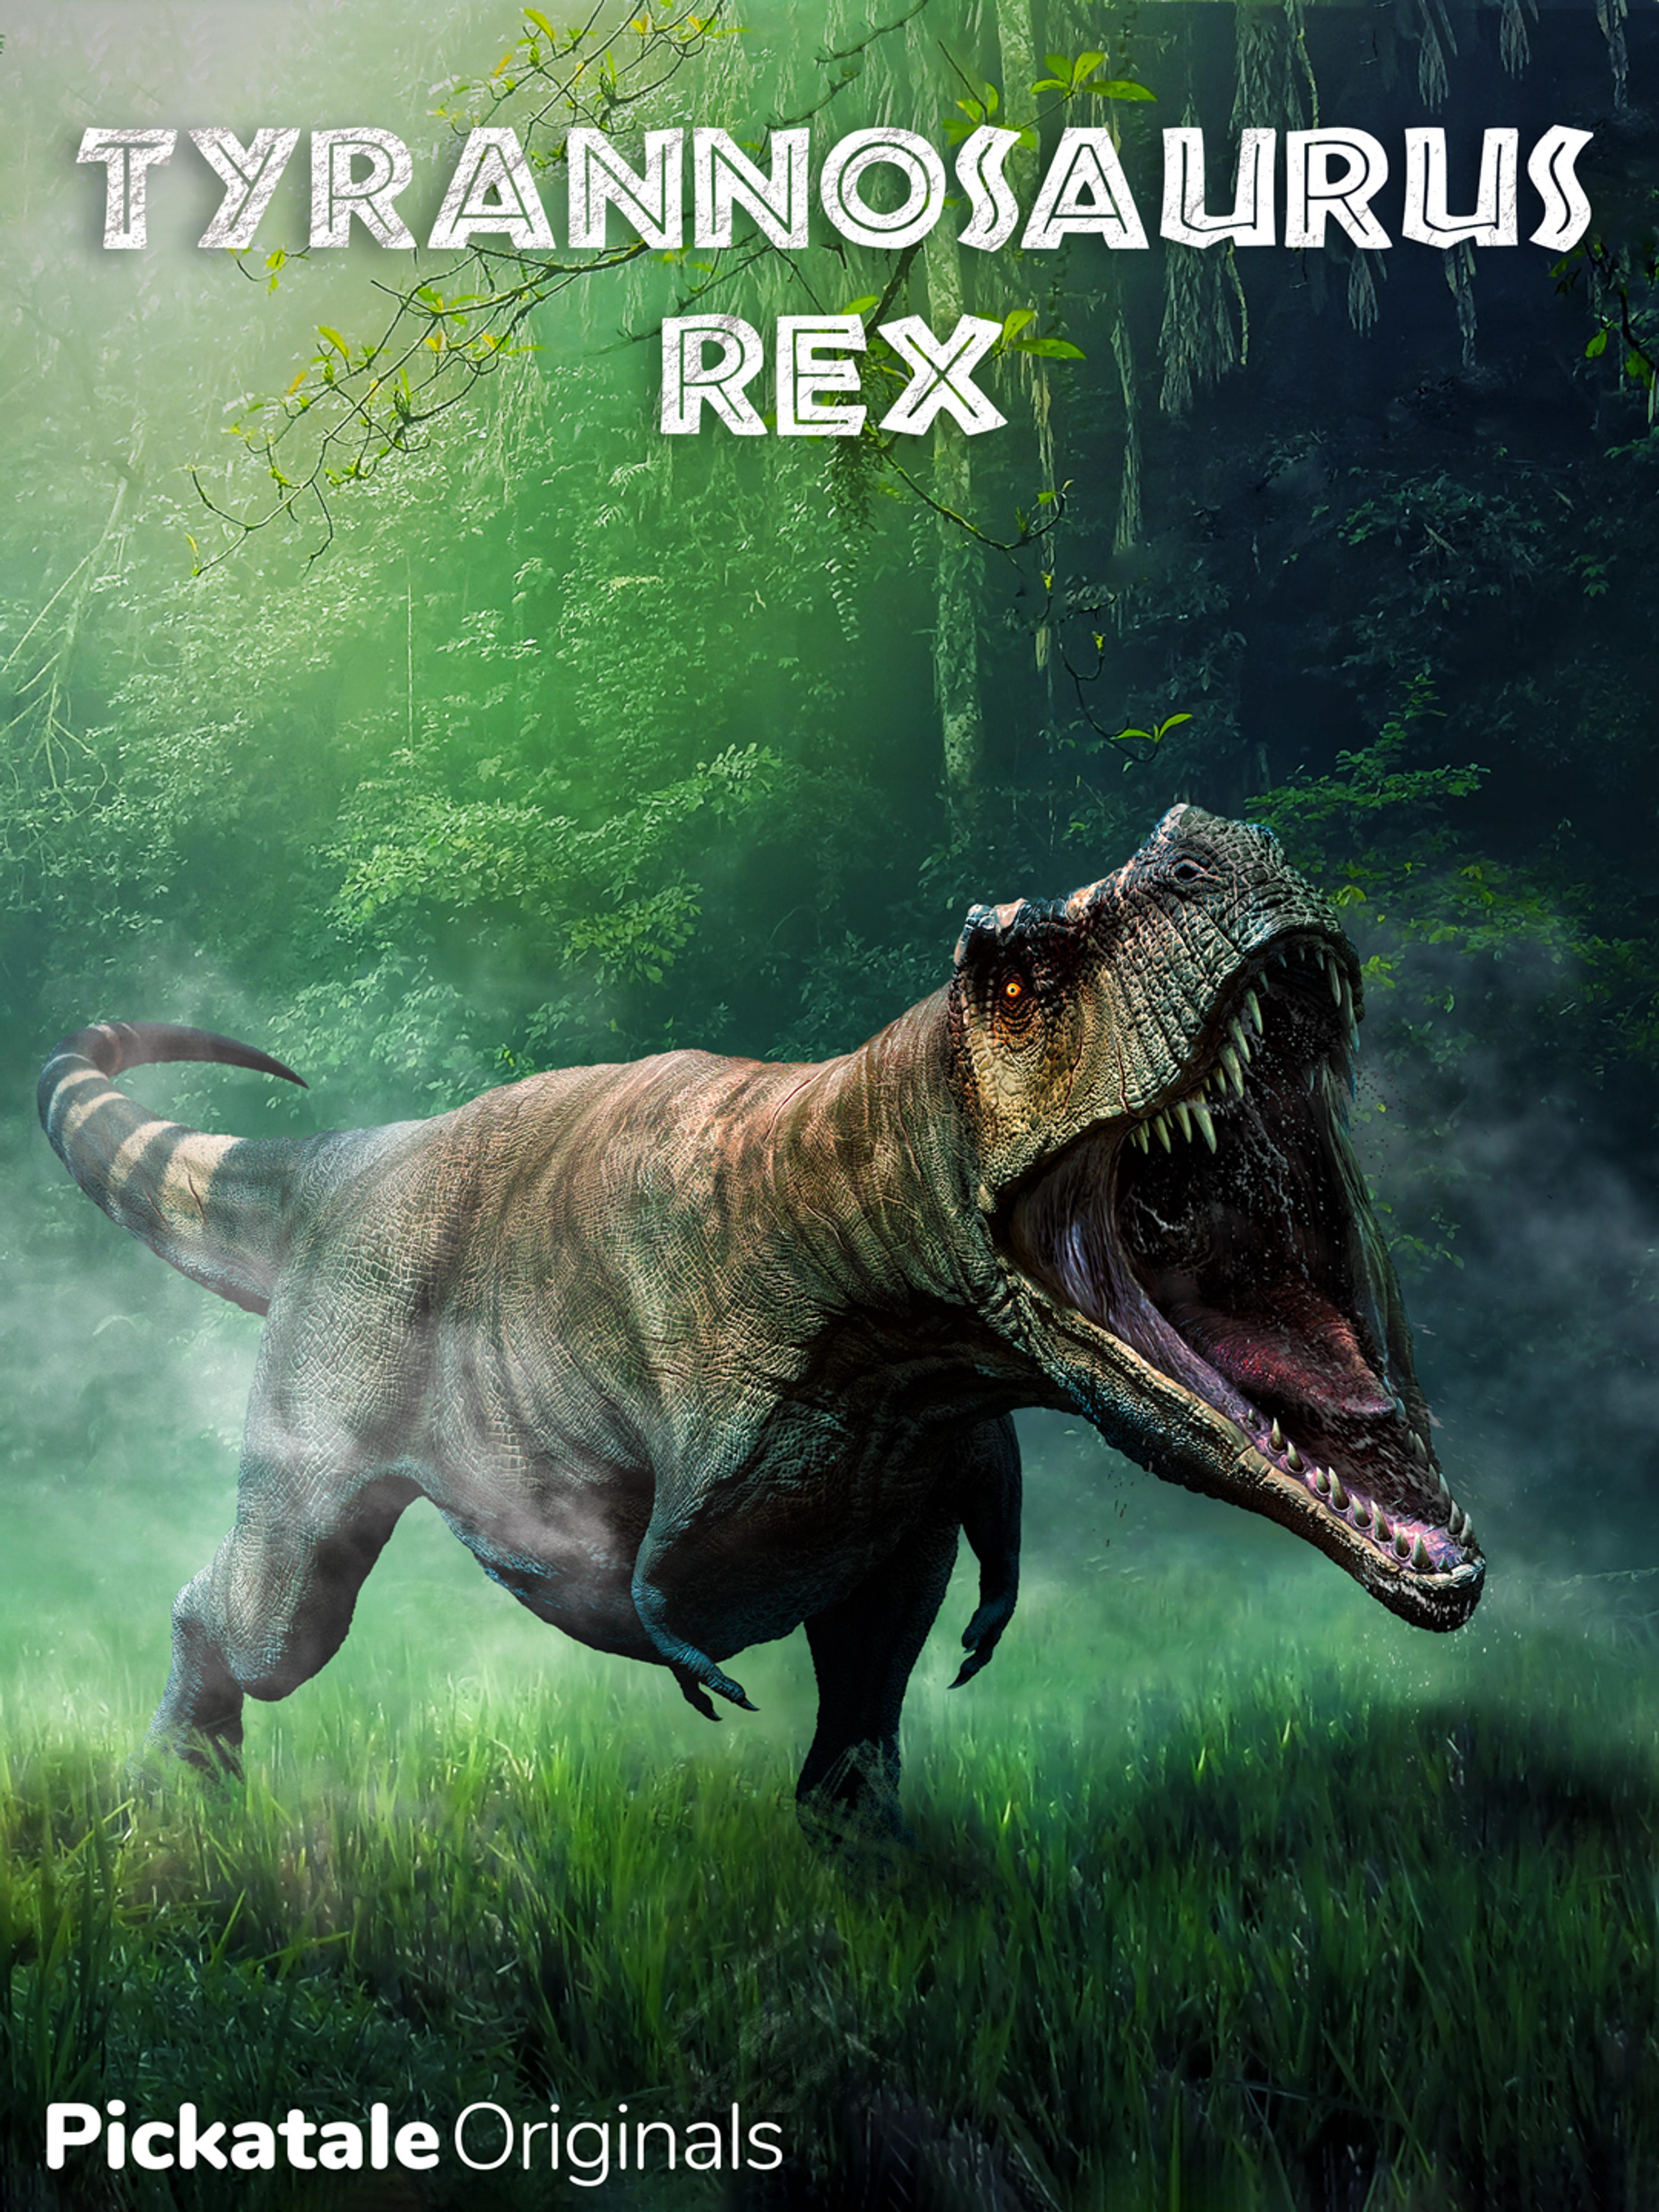 Tyrannosaurus rex - Dinosaurernes konge